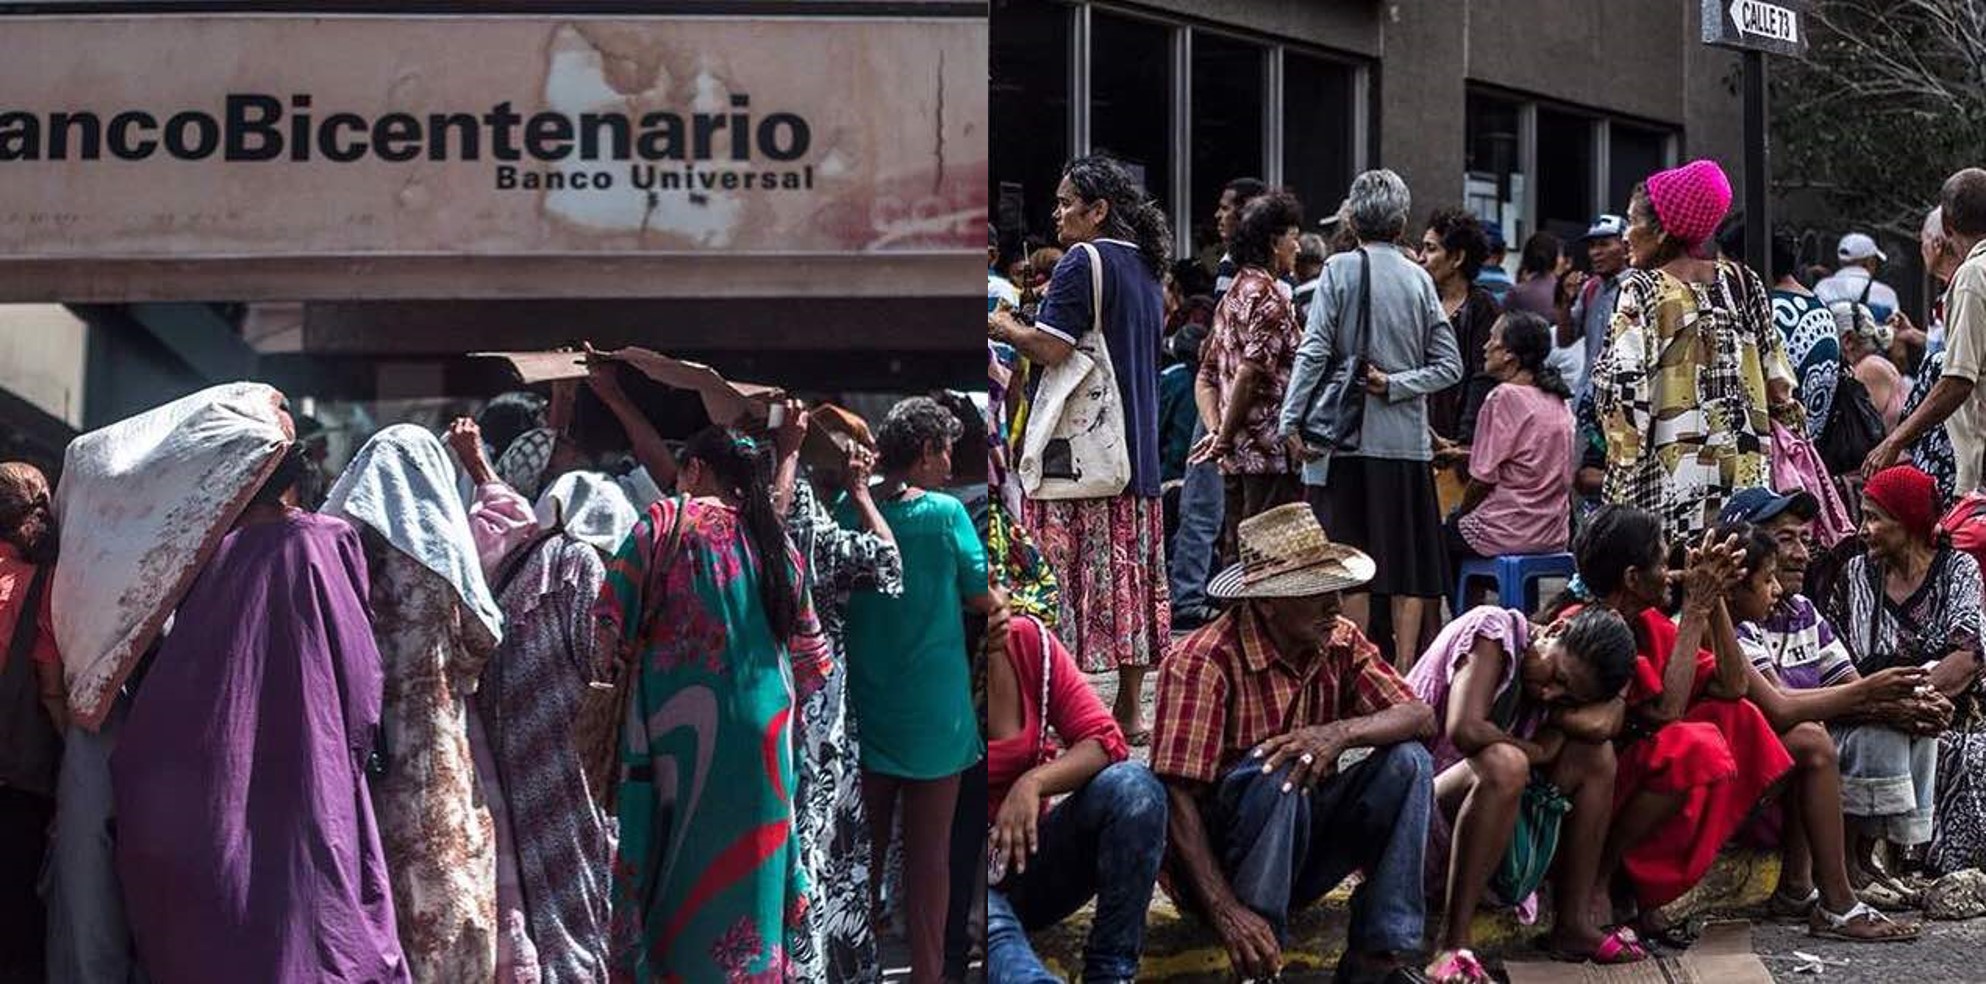 Vente Joven Zulia: Bancos dan 10 mil bolívares que no sirven ni para comprar un pan